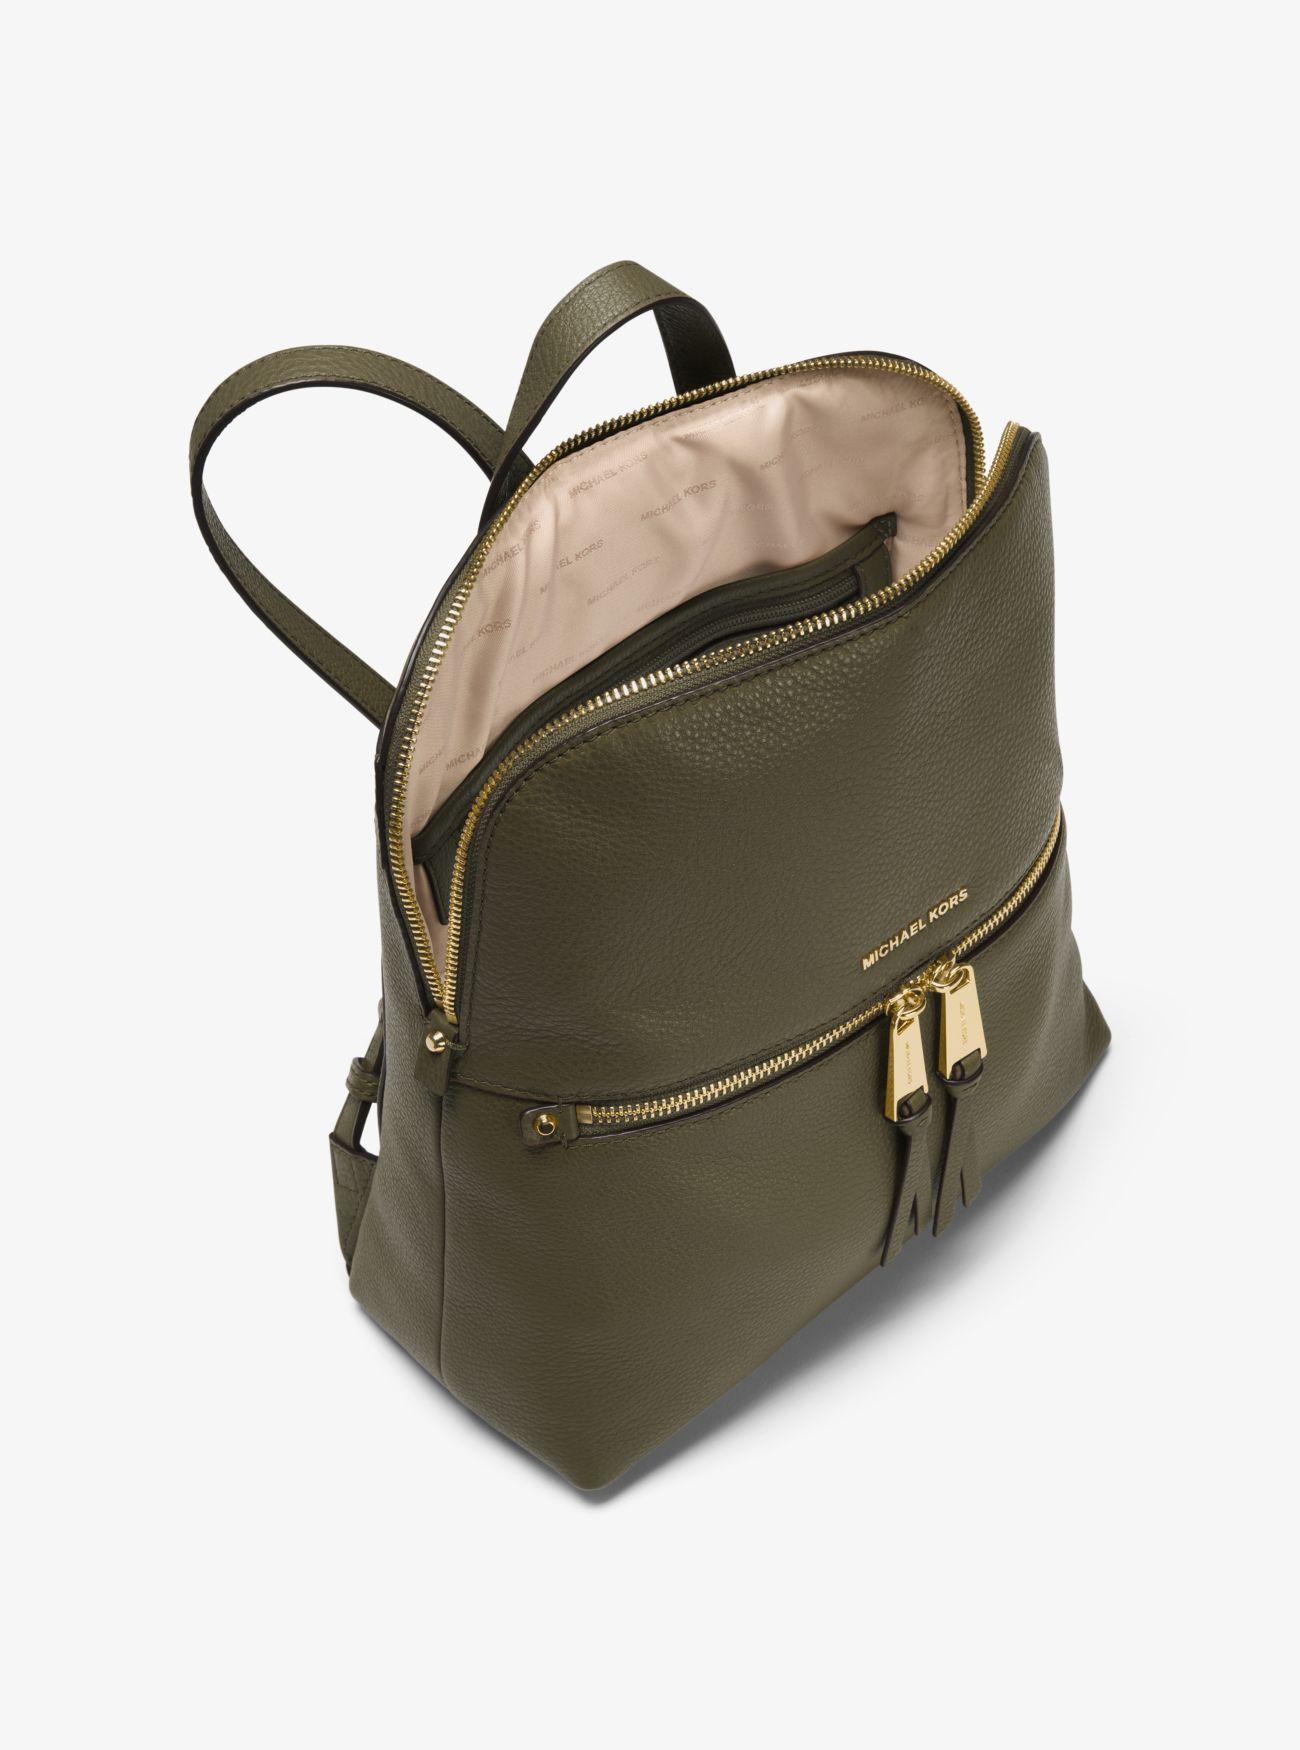 Michael Kors Rhea Medium Slim Leather Backpack in Green | Lyst